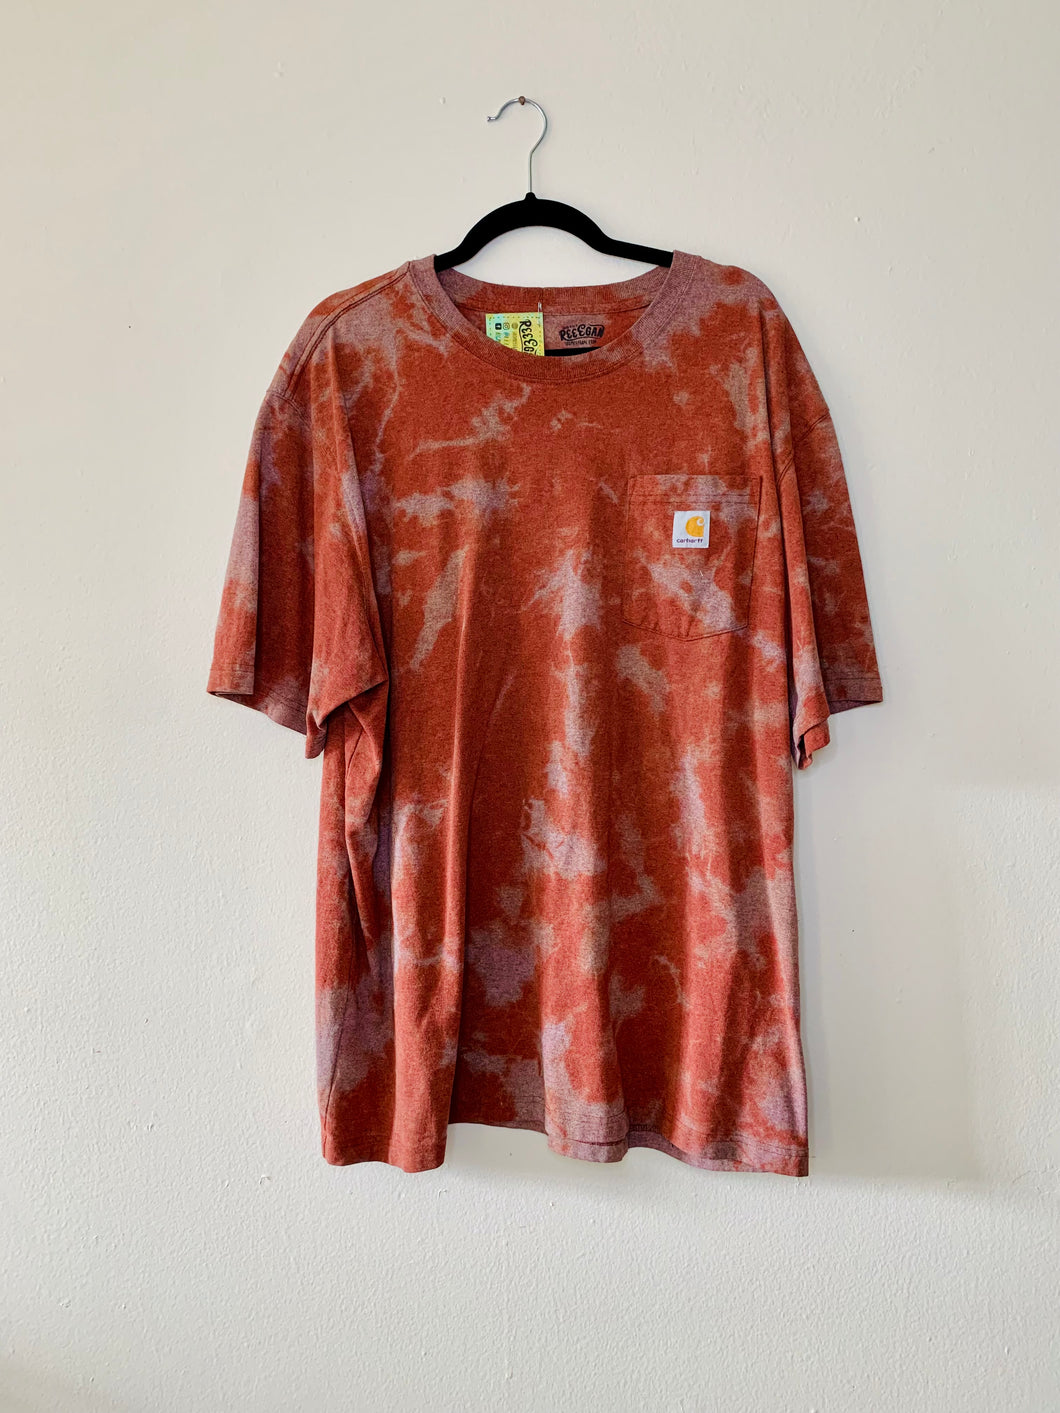 Reverse Tie-Dye Carhartt T-shirt